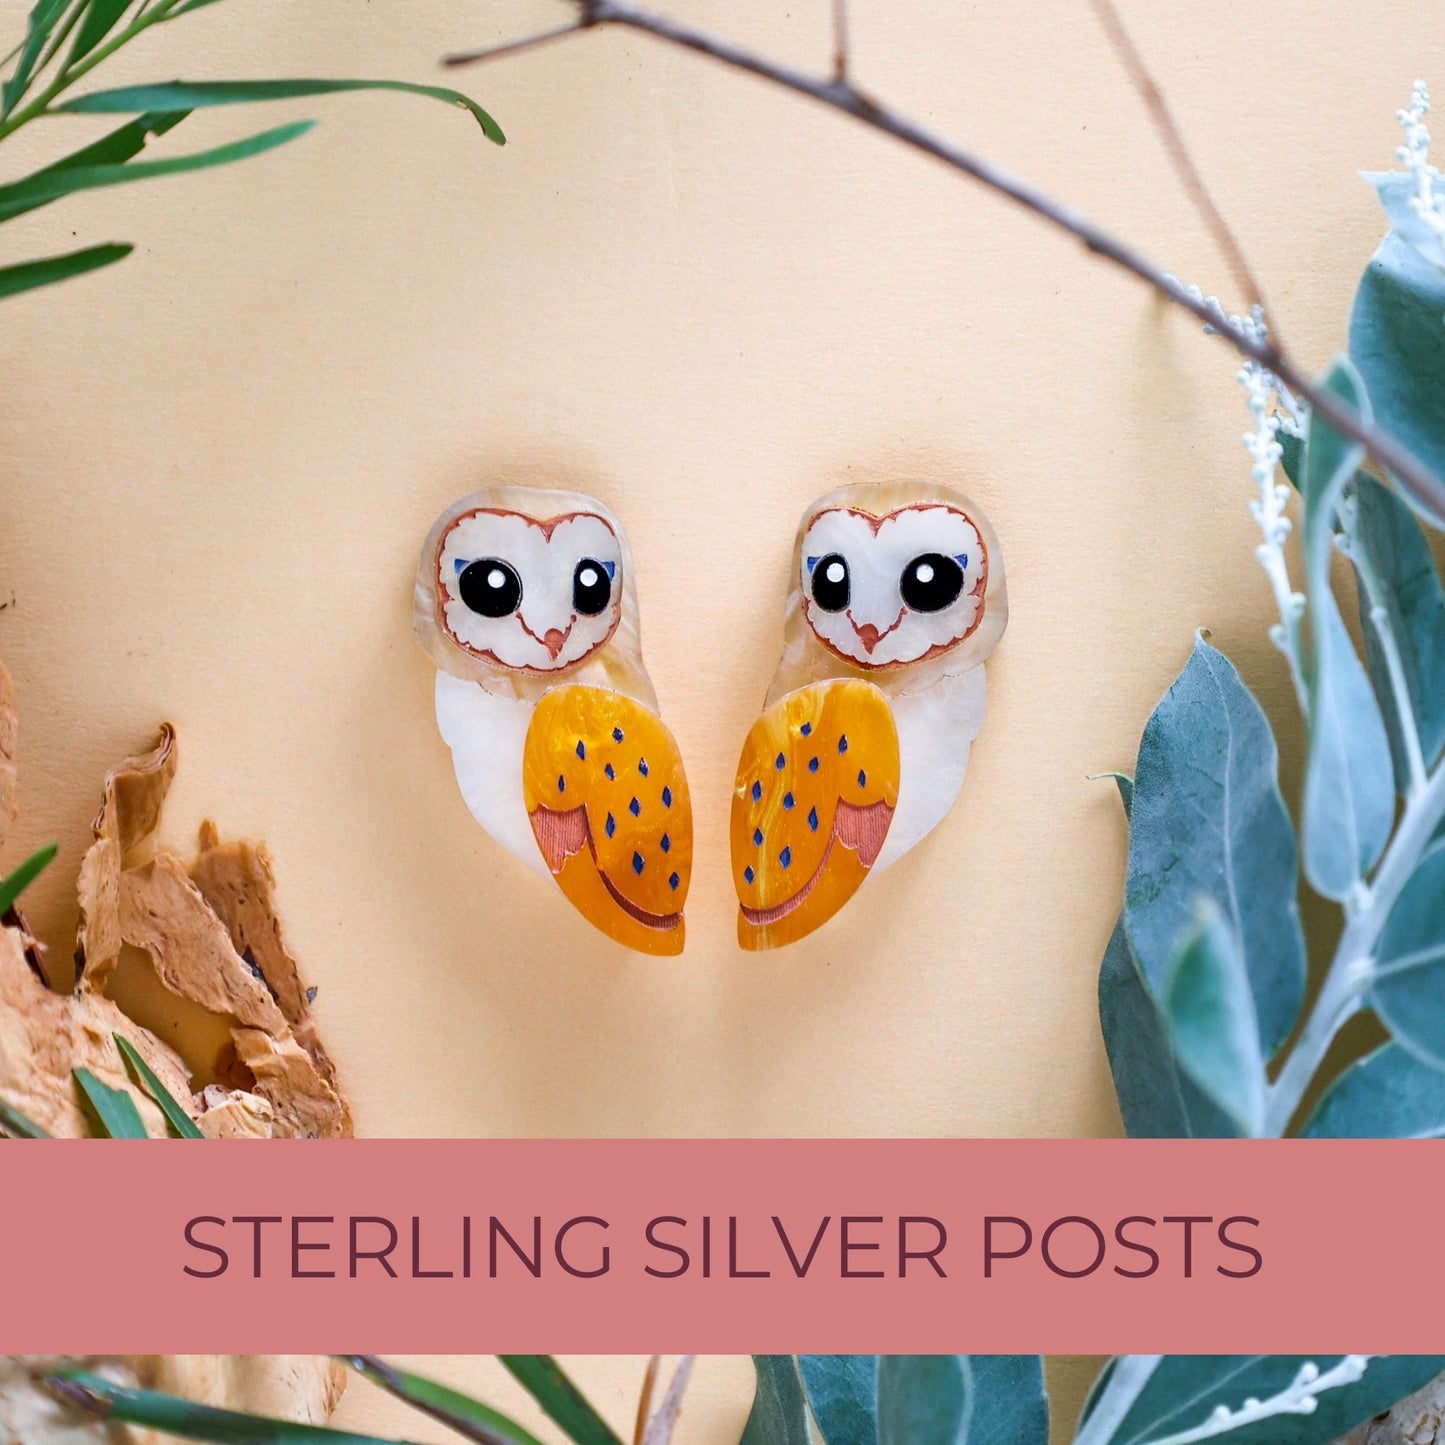 BINKABU Barn Owl Studs handmade acrylic bird earrings